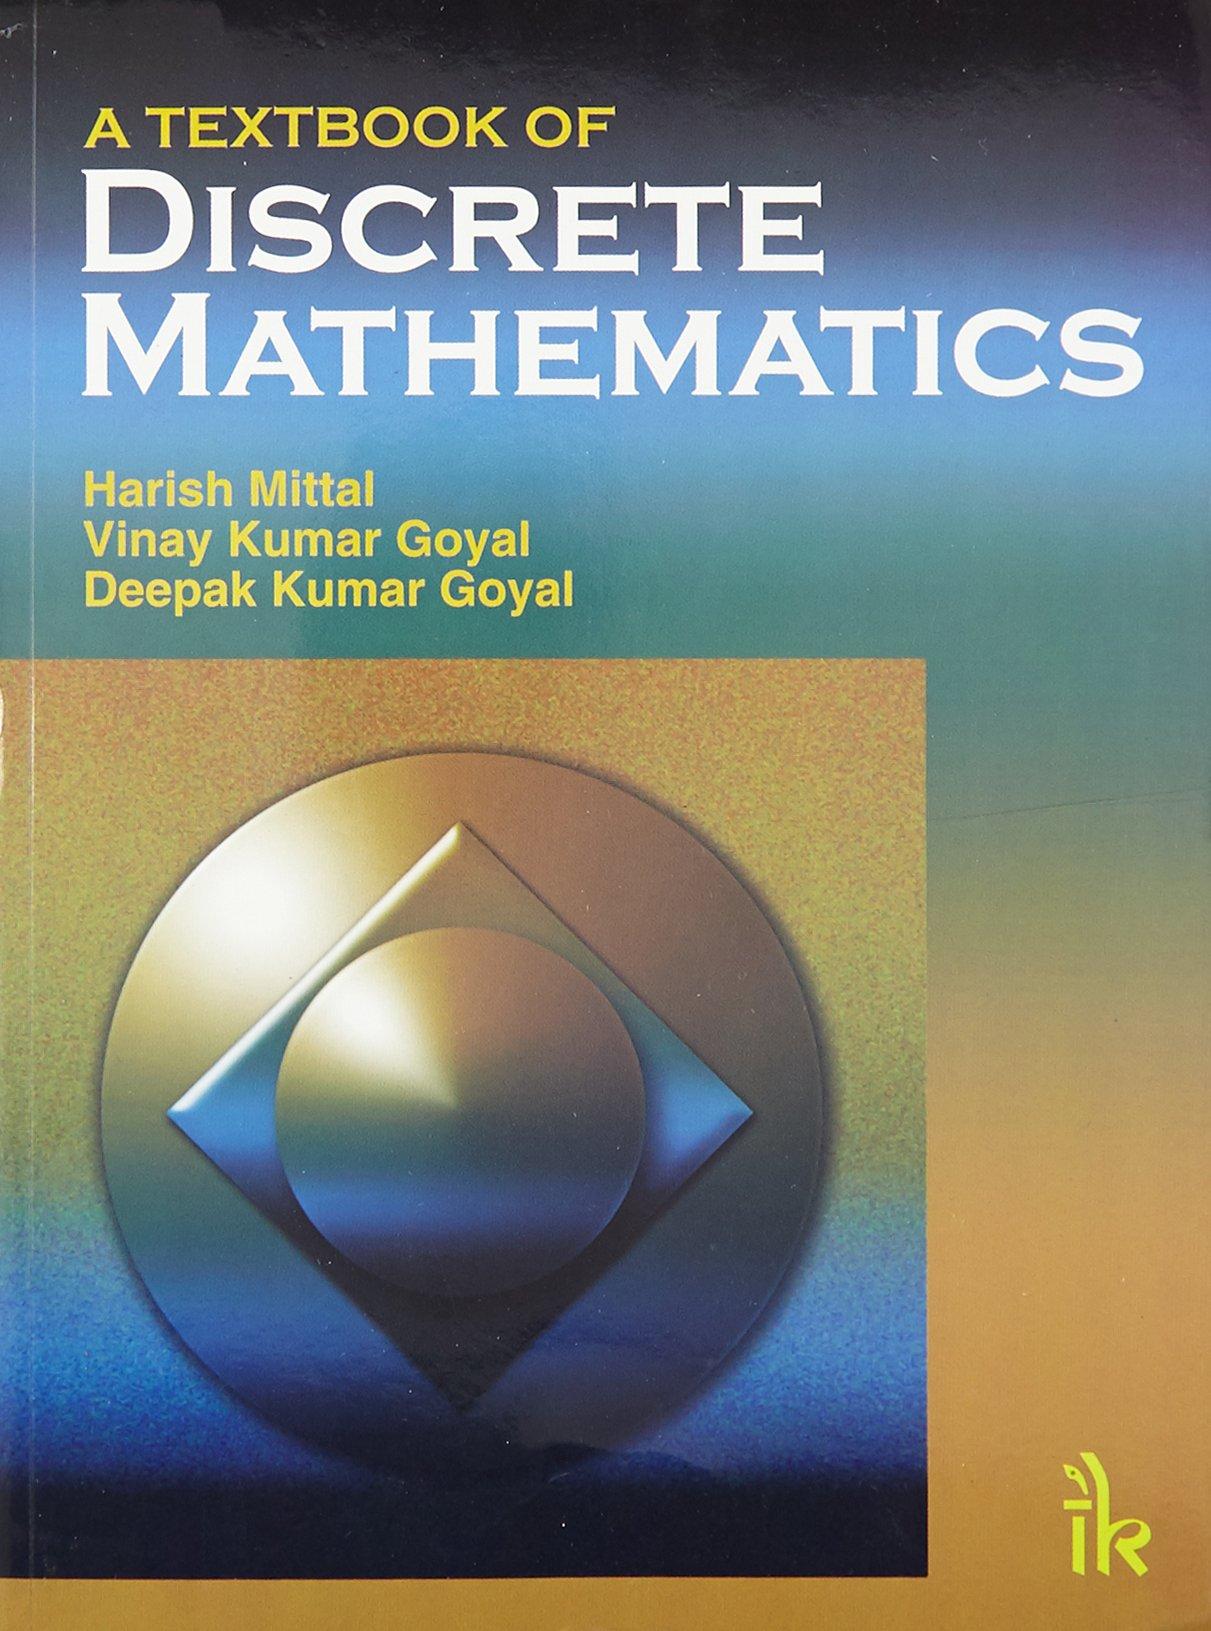 a textbook of discrete mathematics 1st edition harish mittal, vinay kumar goyal, deepak kumar goyal